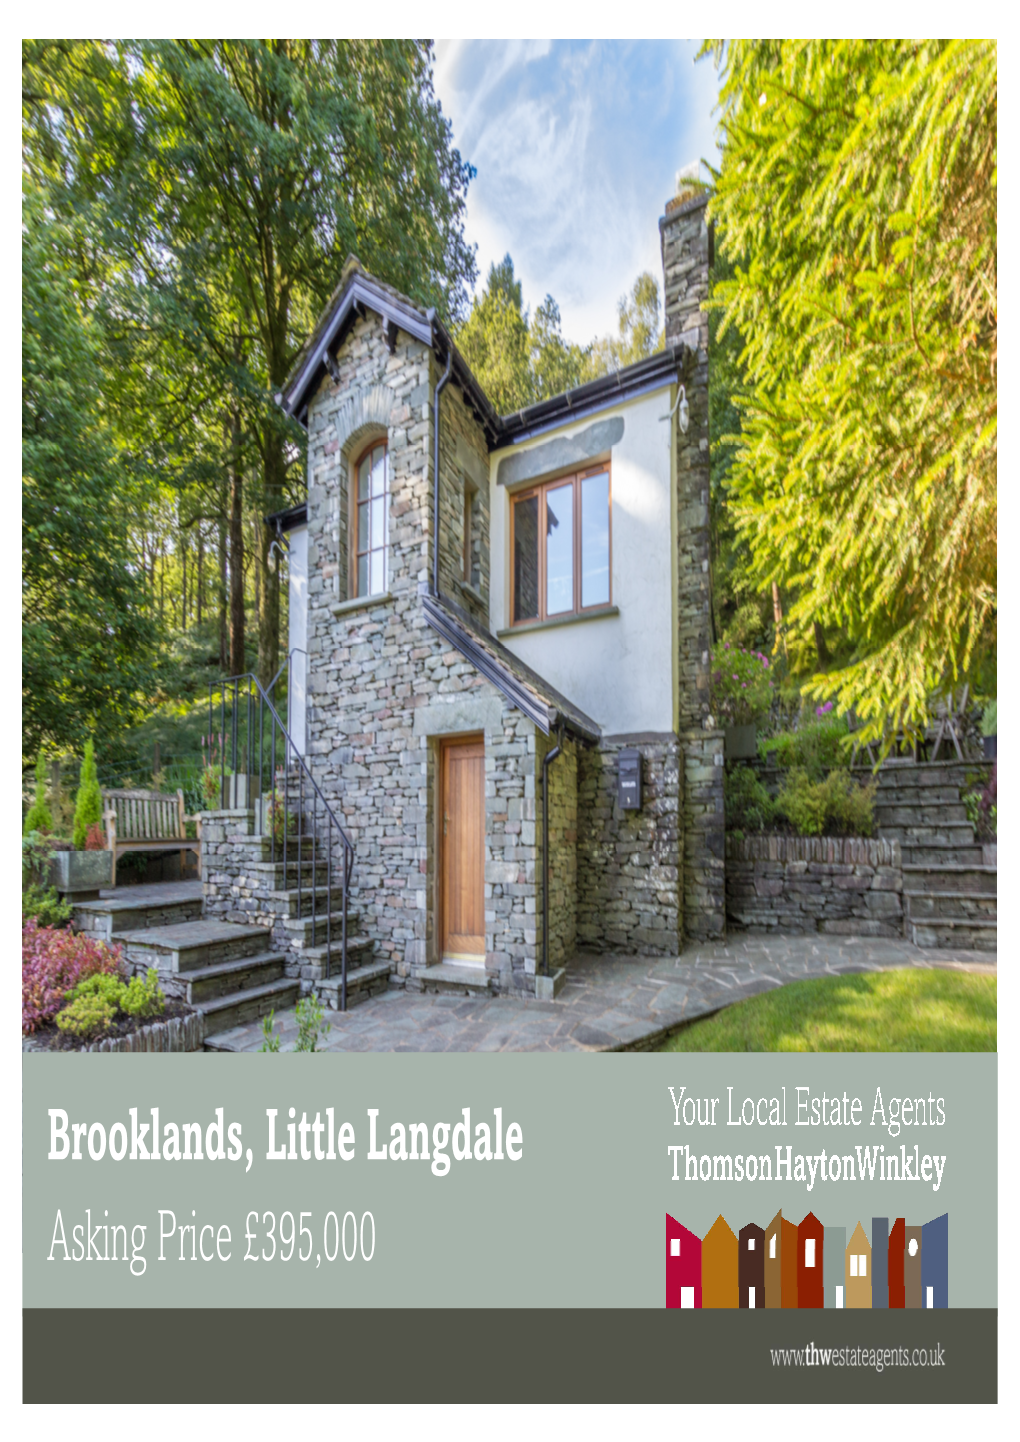 Brooklands, Little Langdale Asking Price £395,000